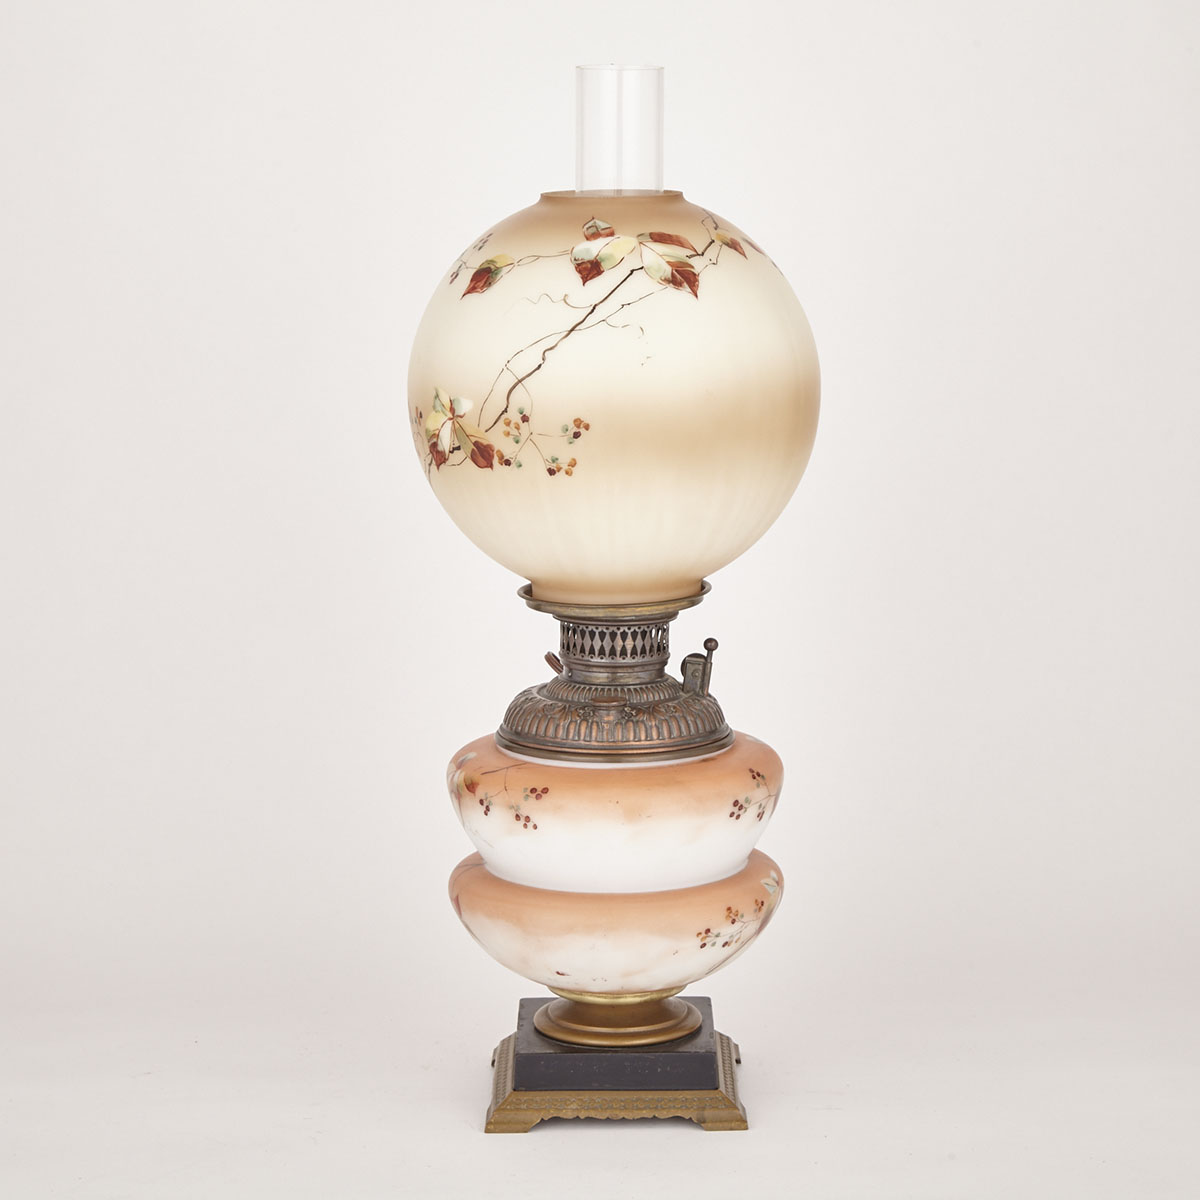 Victorian Enamelled Glass Hurricane Lamp, c.1870